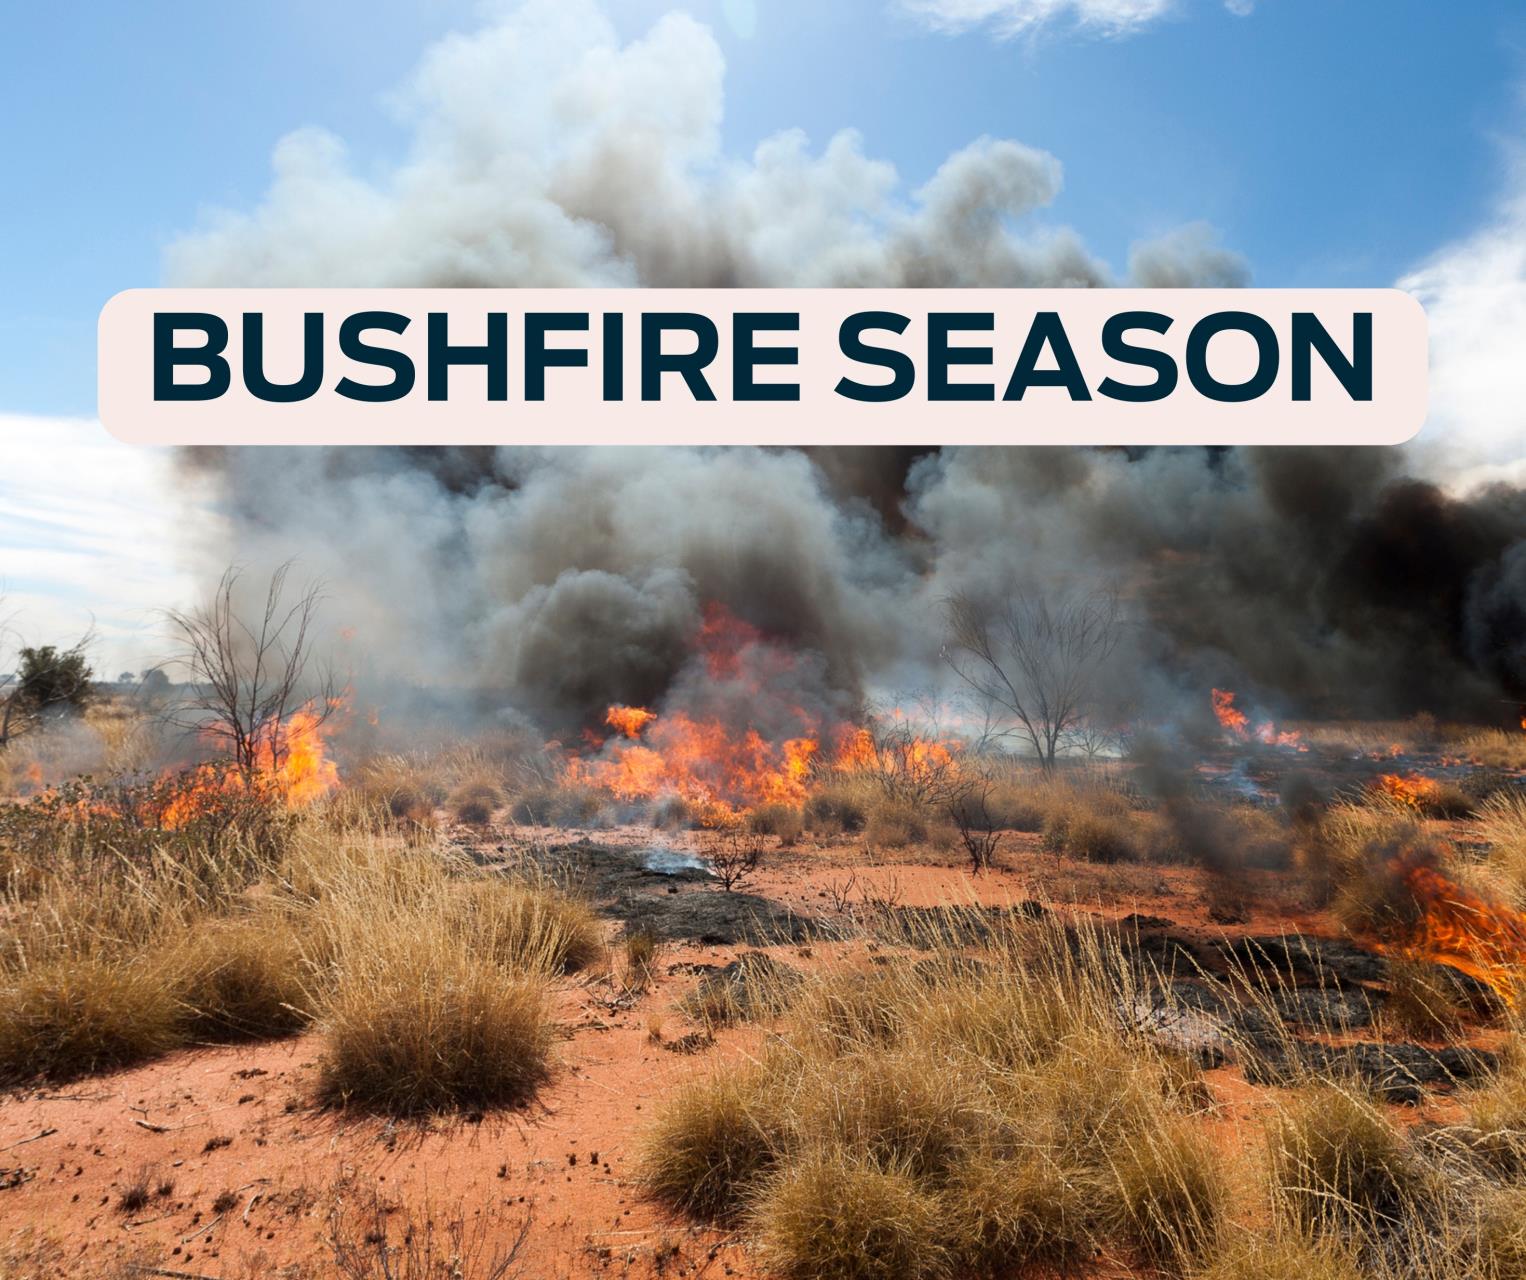 Travelling during bushfire season